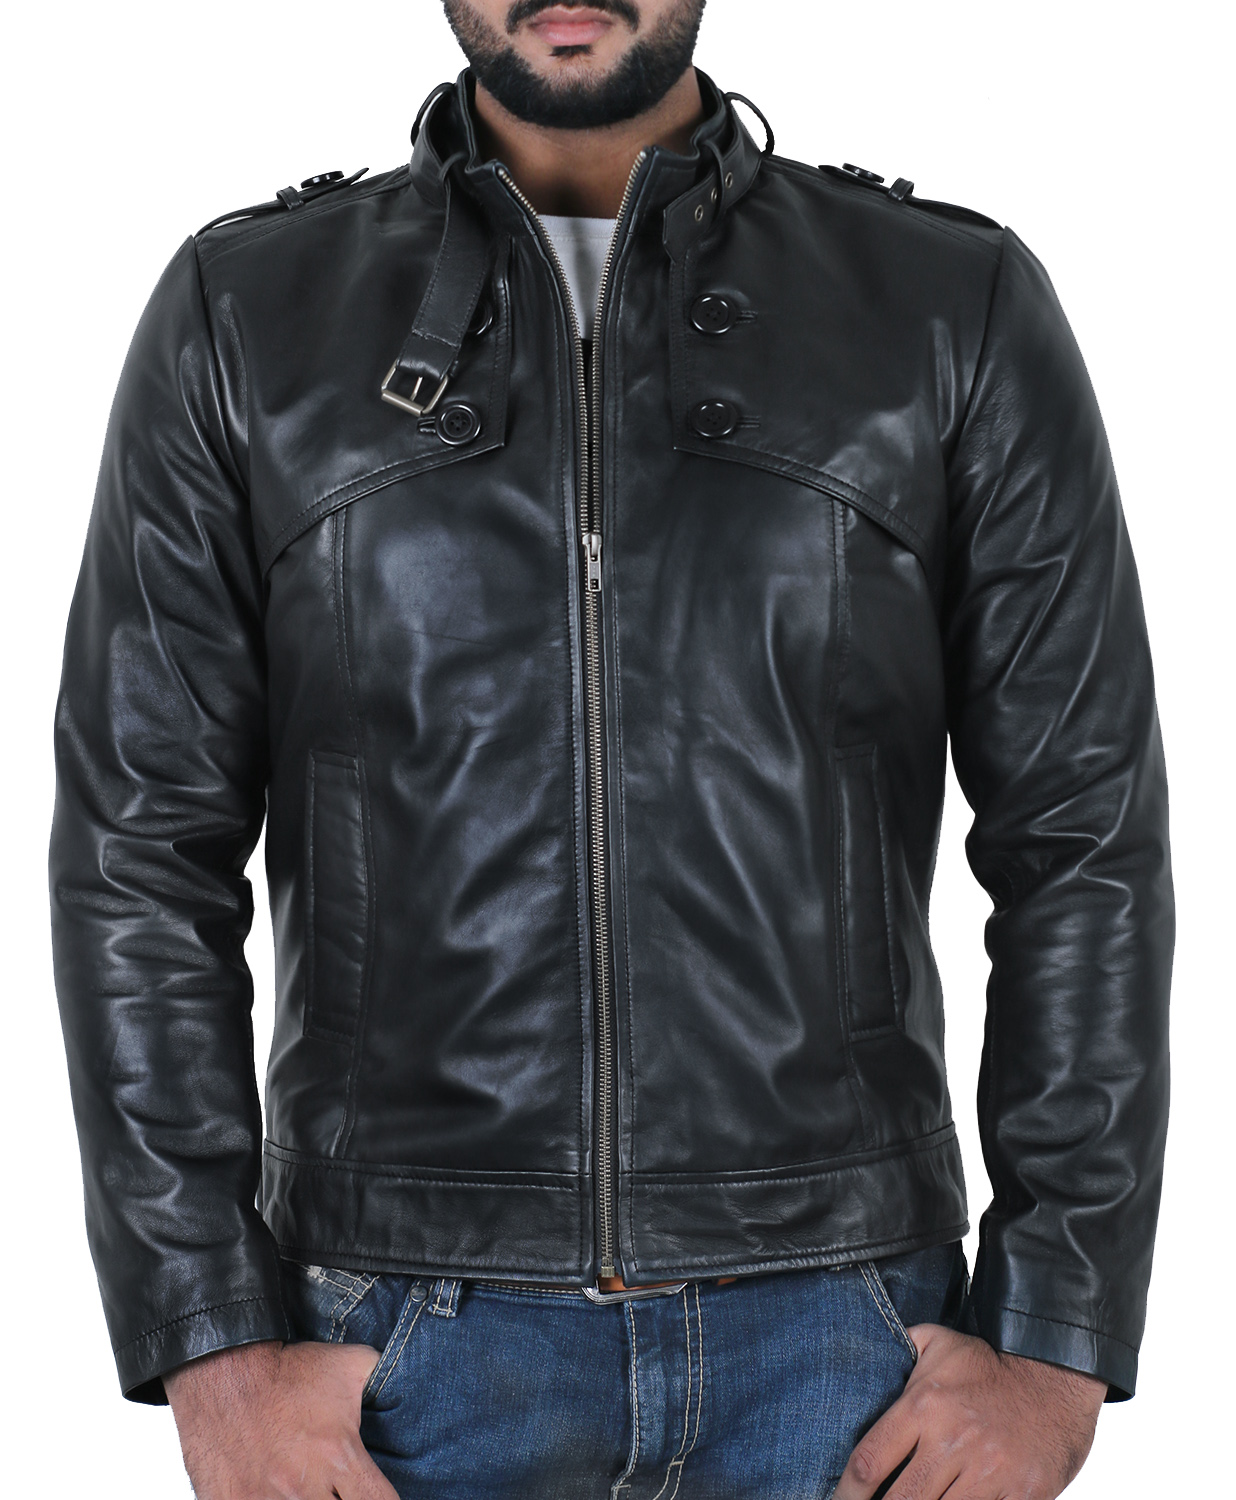 Laverapelle Mens Black Genuine Lambskin Leather Jacket - 1501303 | eBay